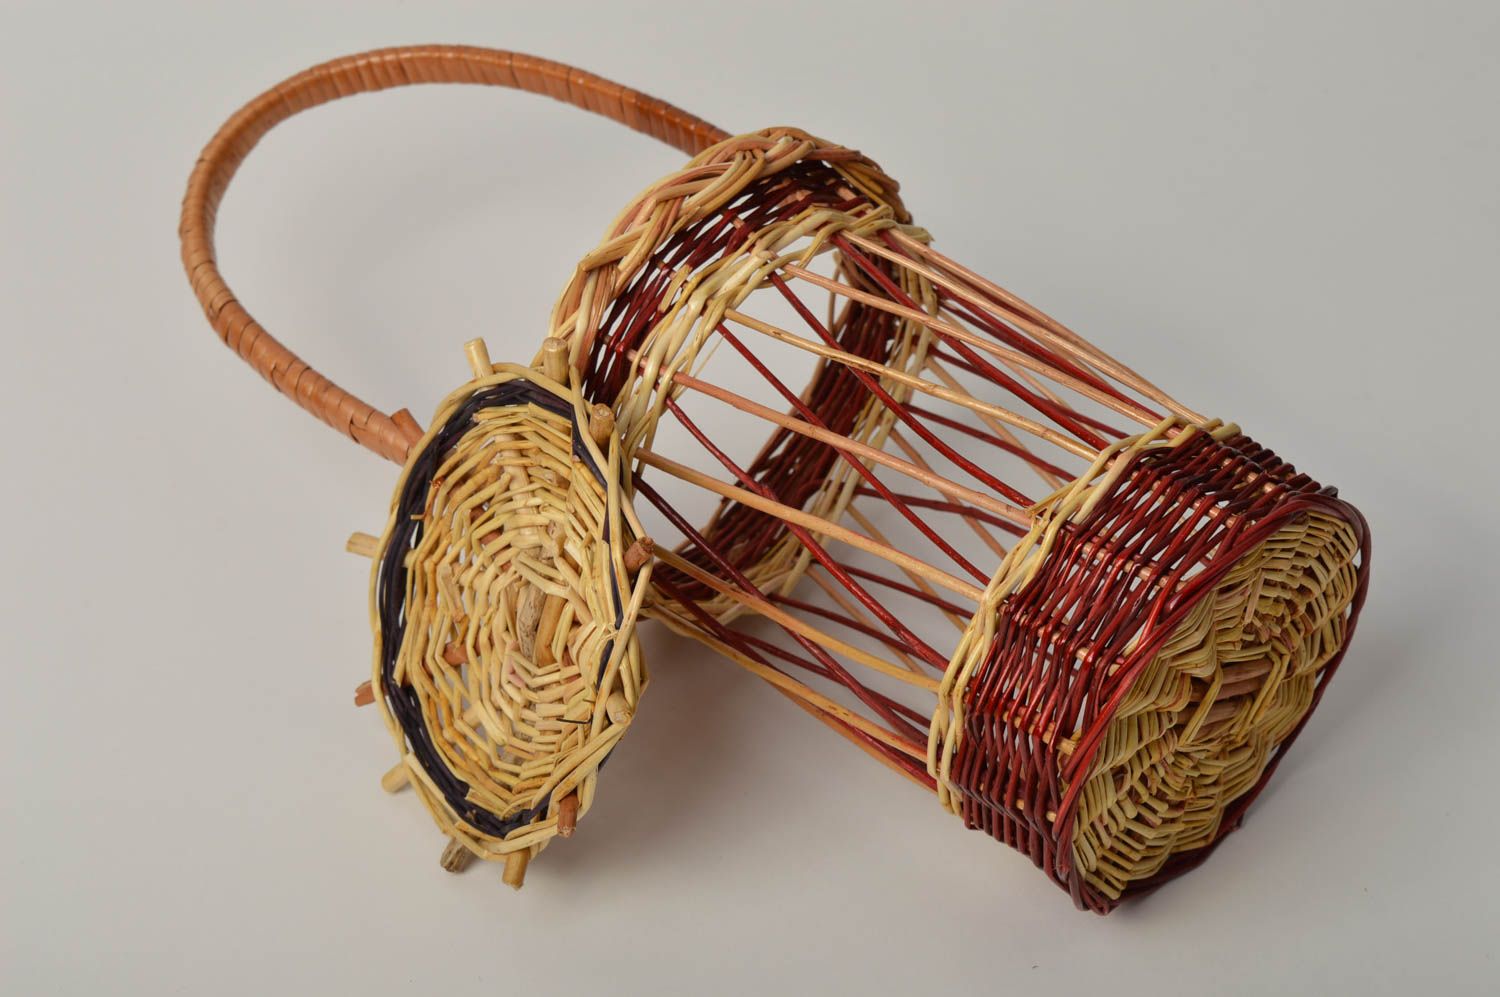 Unusual handmade woven cachepot interior decorating home goods gift ideas photo 4